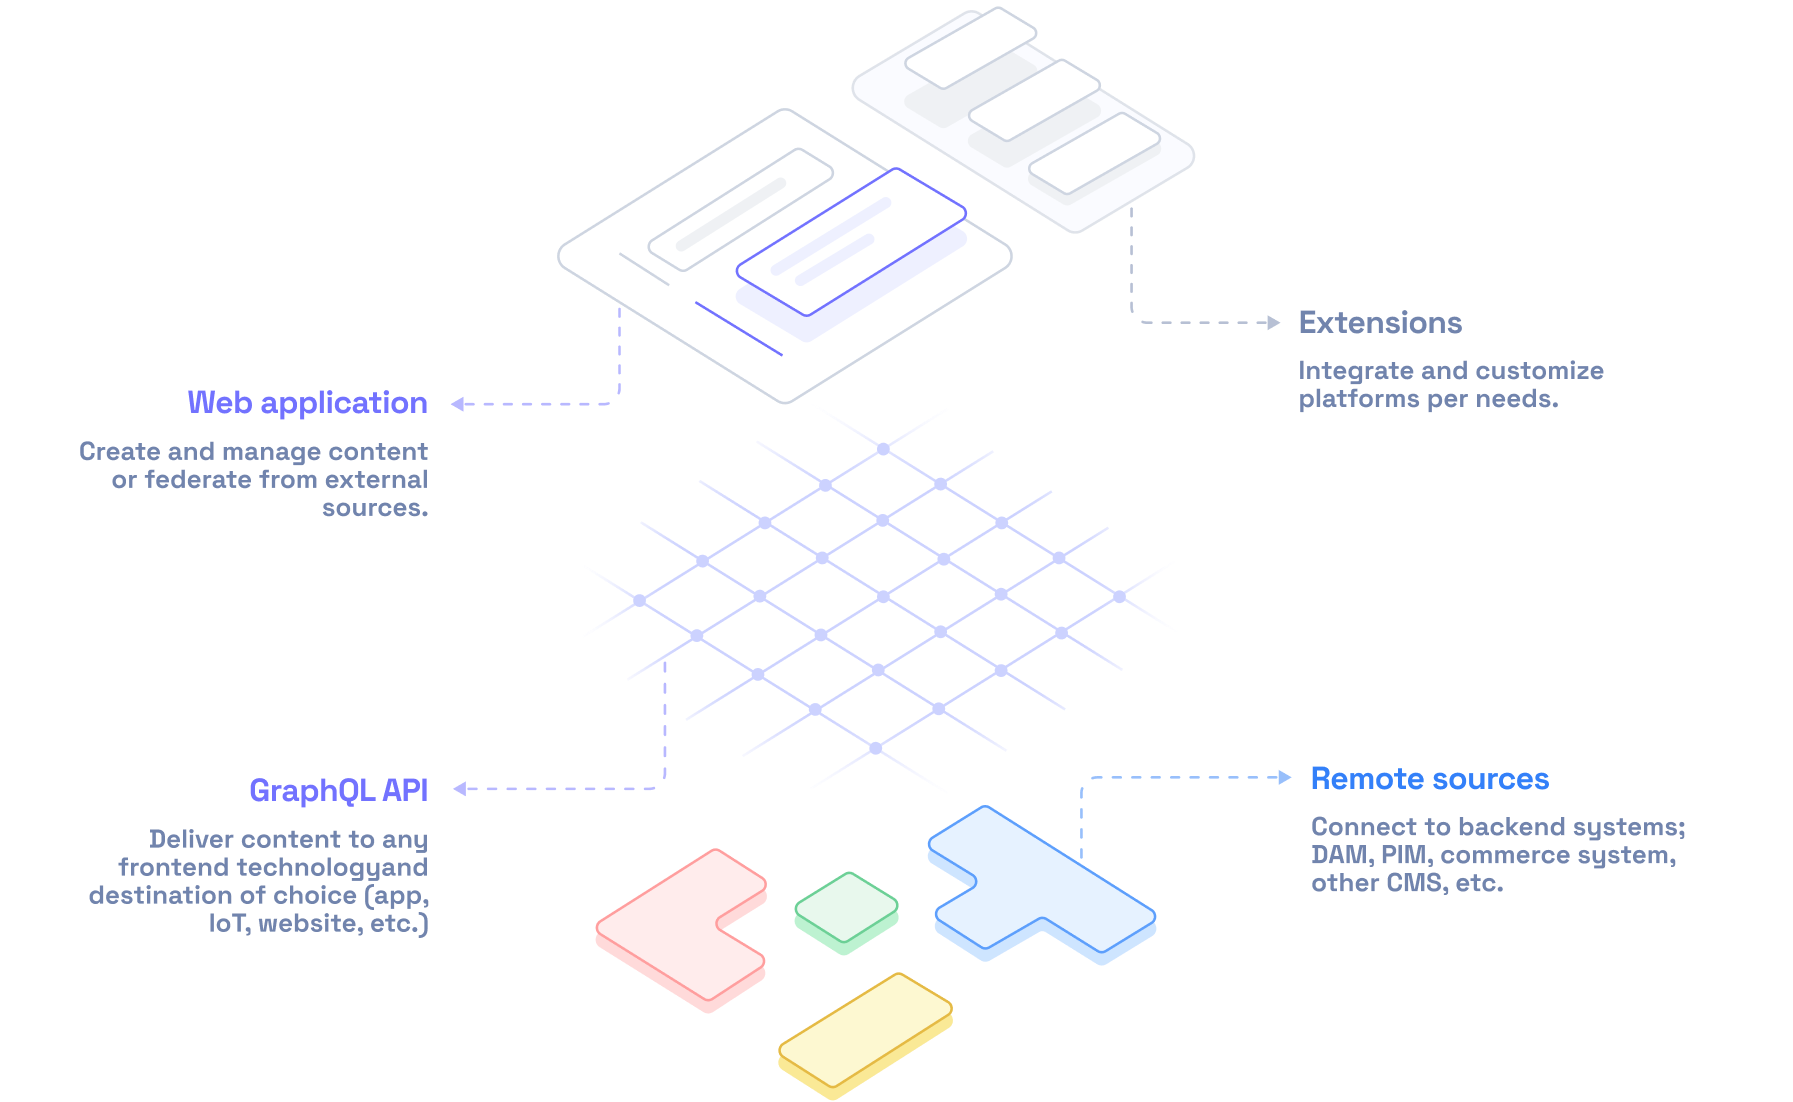 The architecture of Hygraph's platform